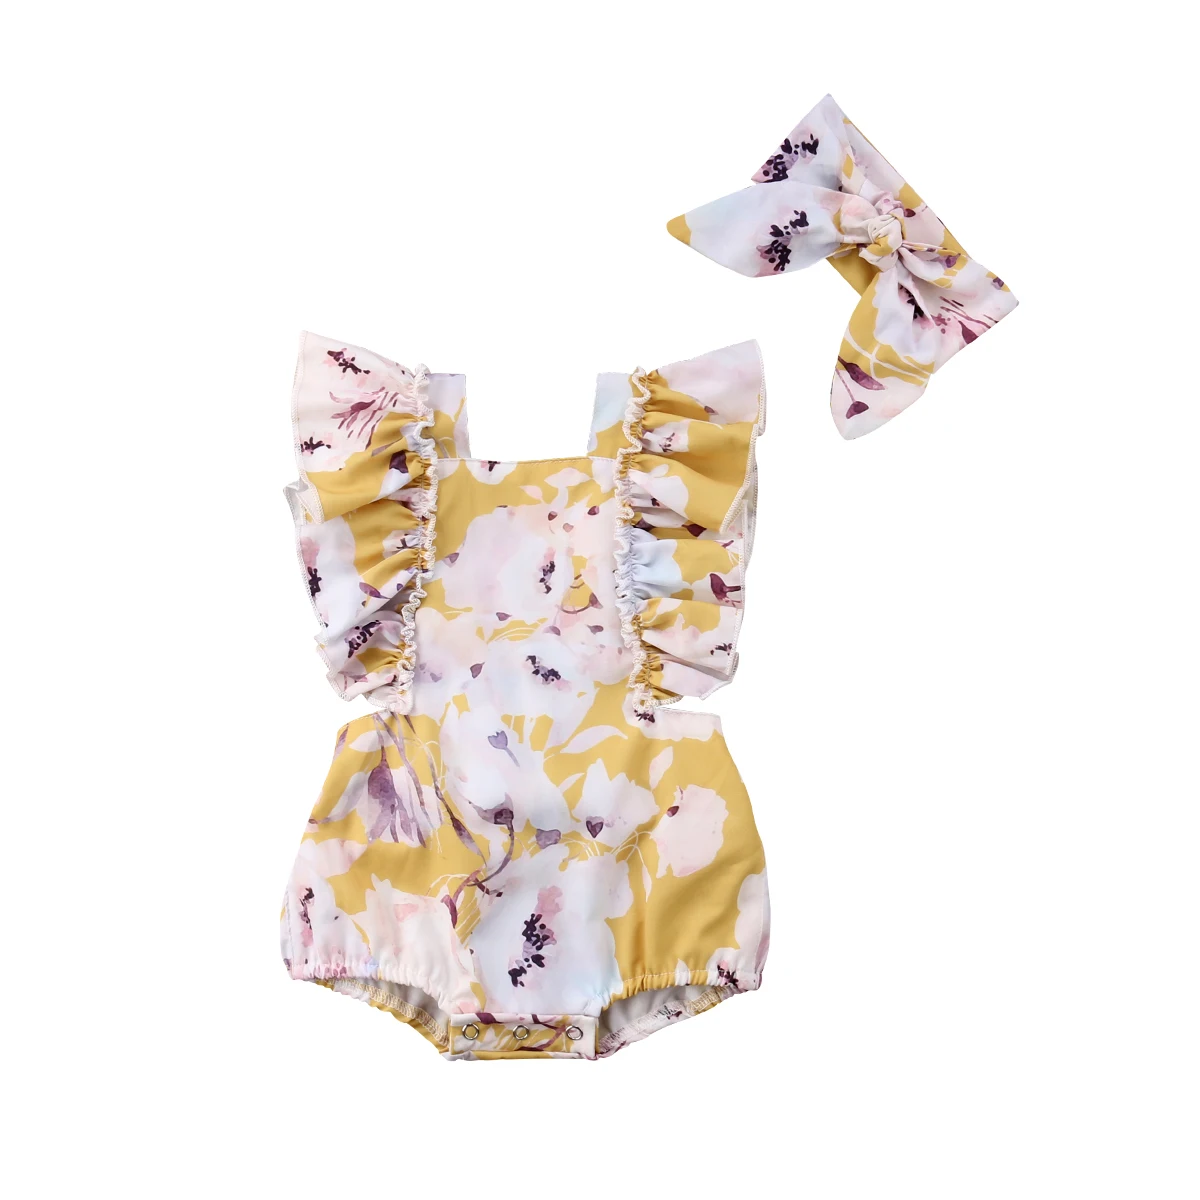 

Infant Newborn Baby Girls Cotton Ruffles Sleeveless Bodysuit Outfits Jumpsuit Sunsuit Size 0-24M